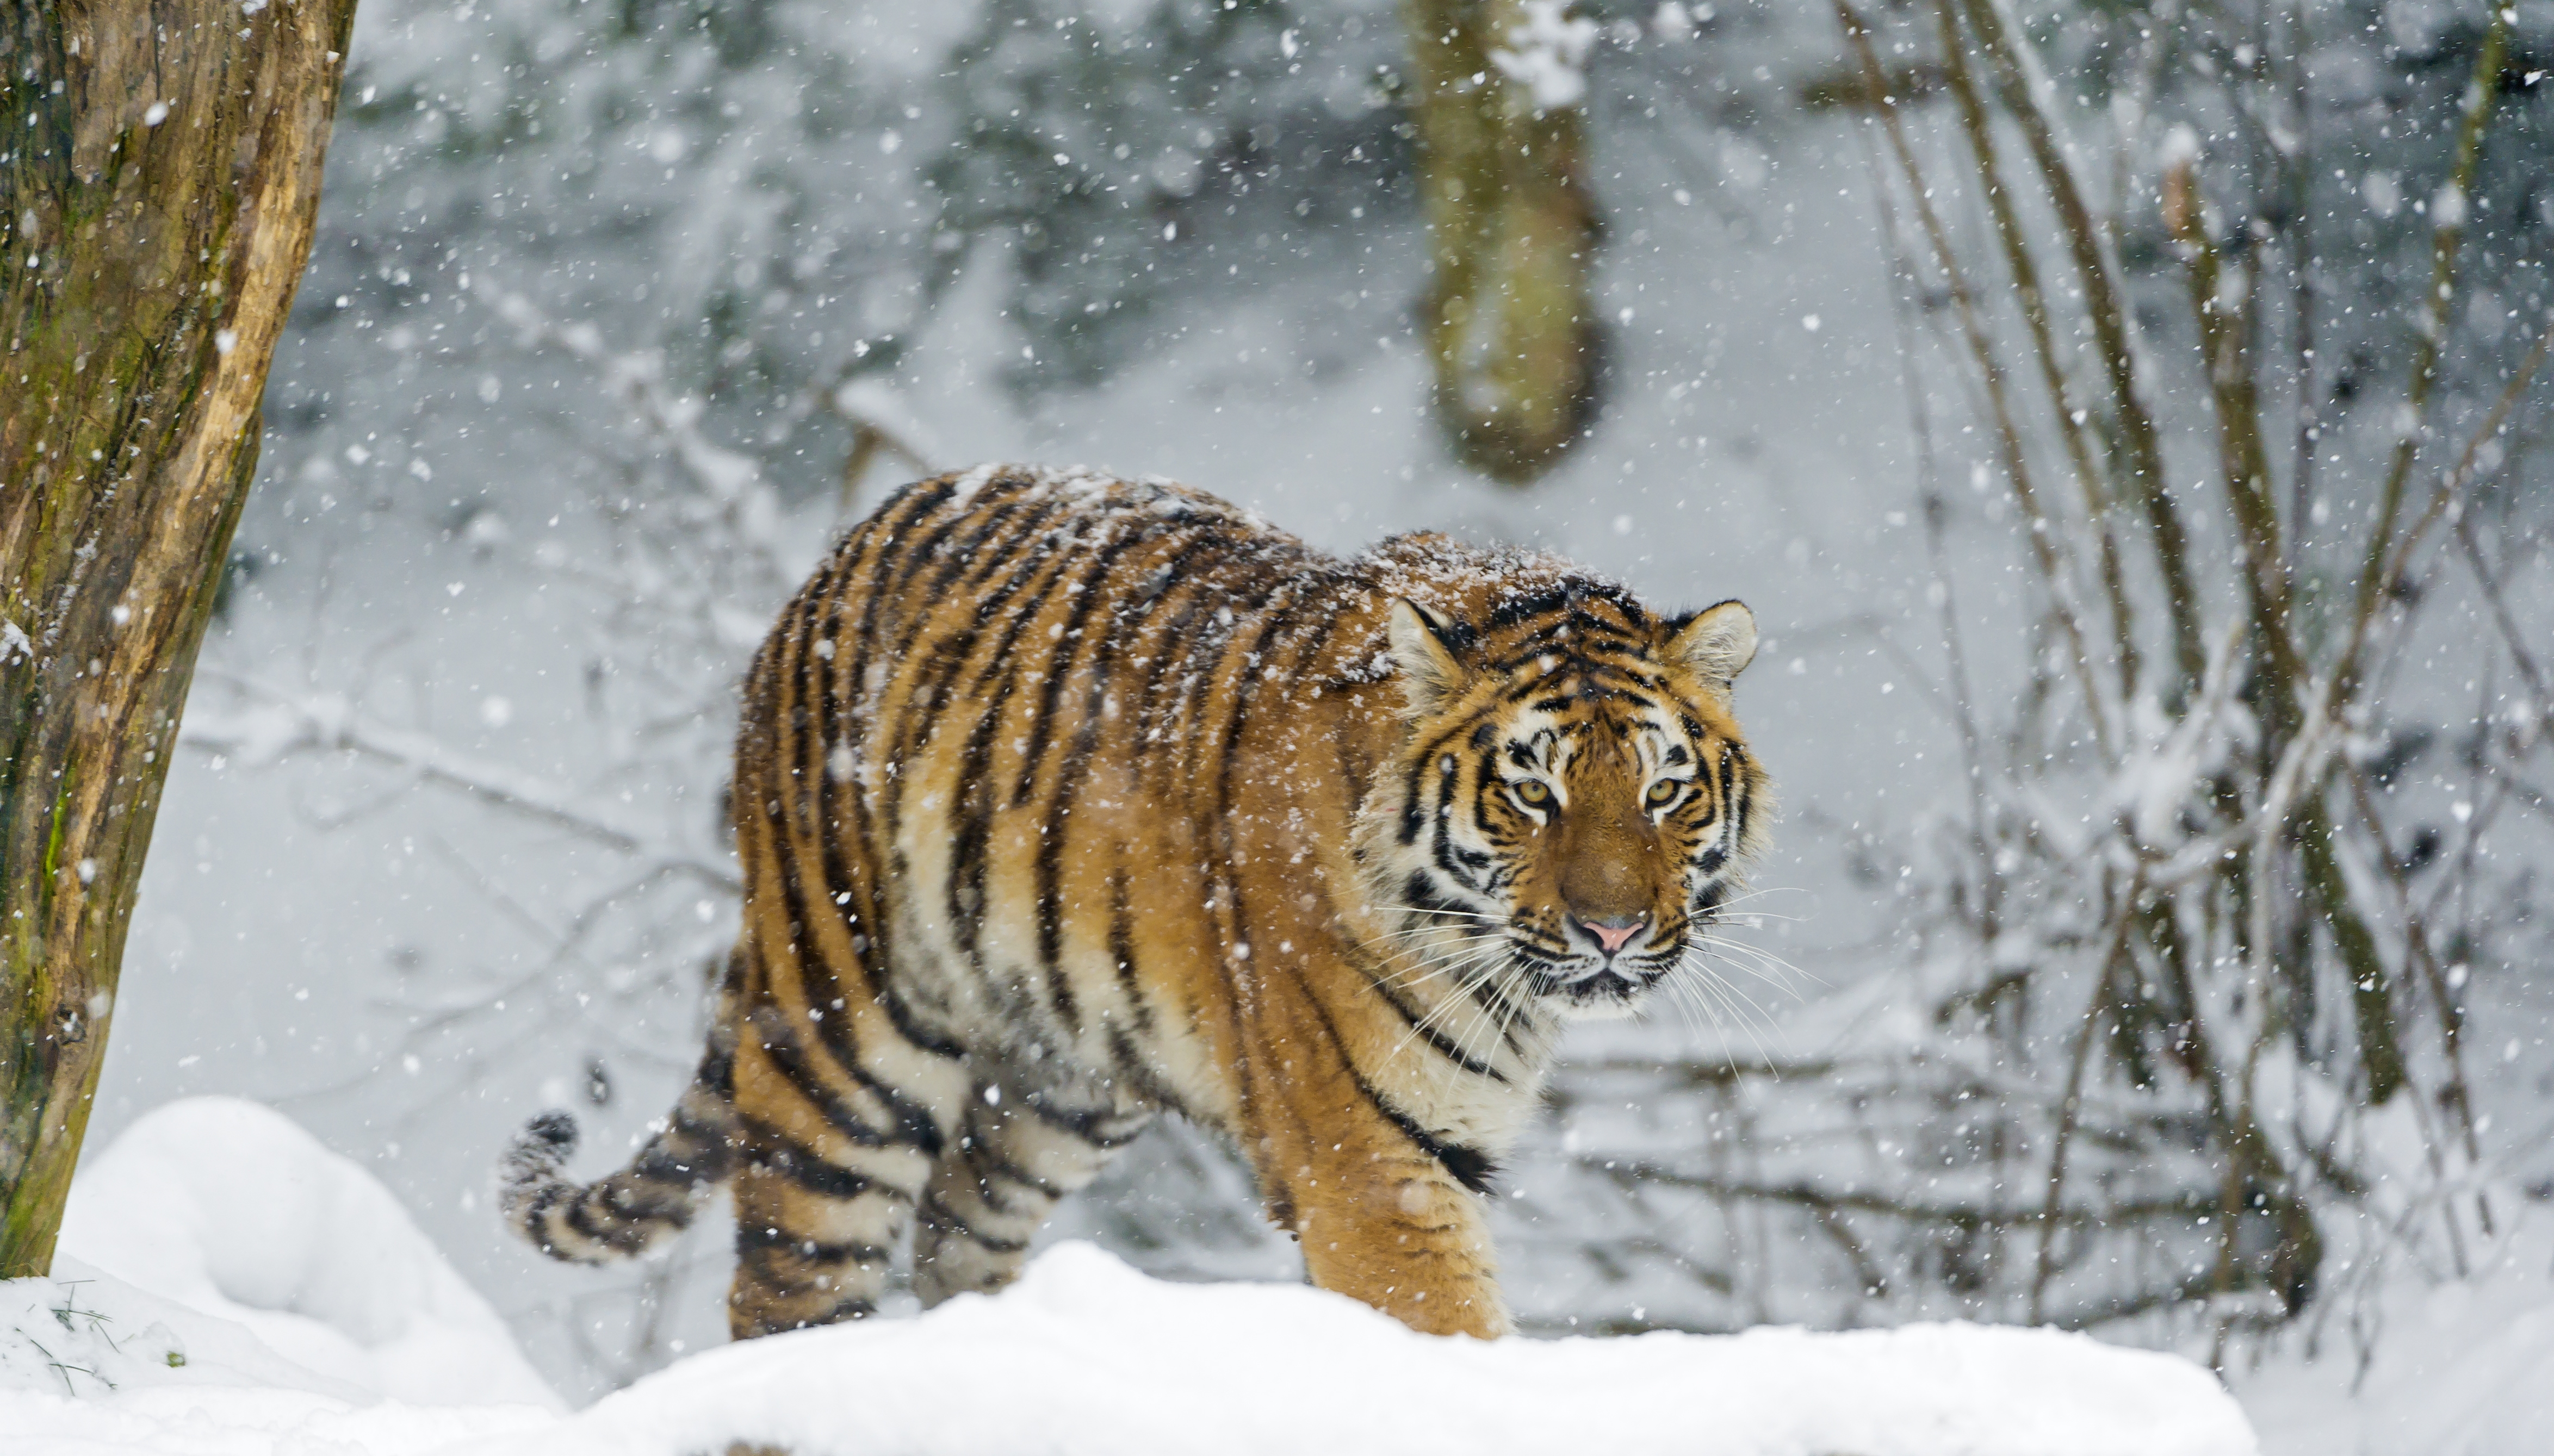 HD wallpaper, 5K, Siberian Tiger, Carnivore, Snowfall, Big Cat, Walking, Predator, Wild Animal, Amur Tiger, Cold, Winter